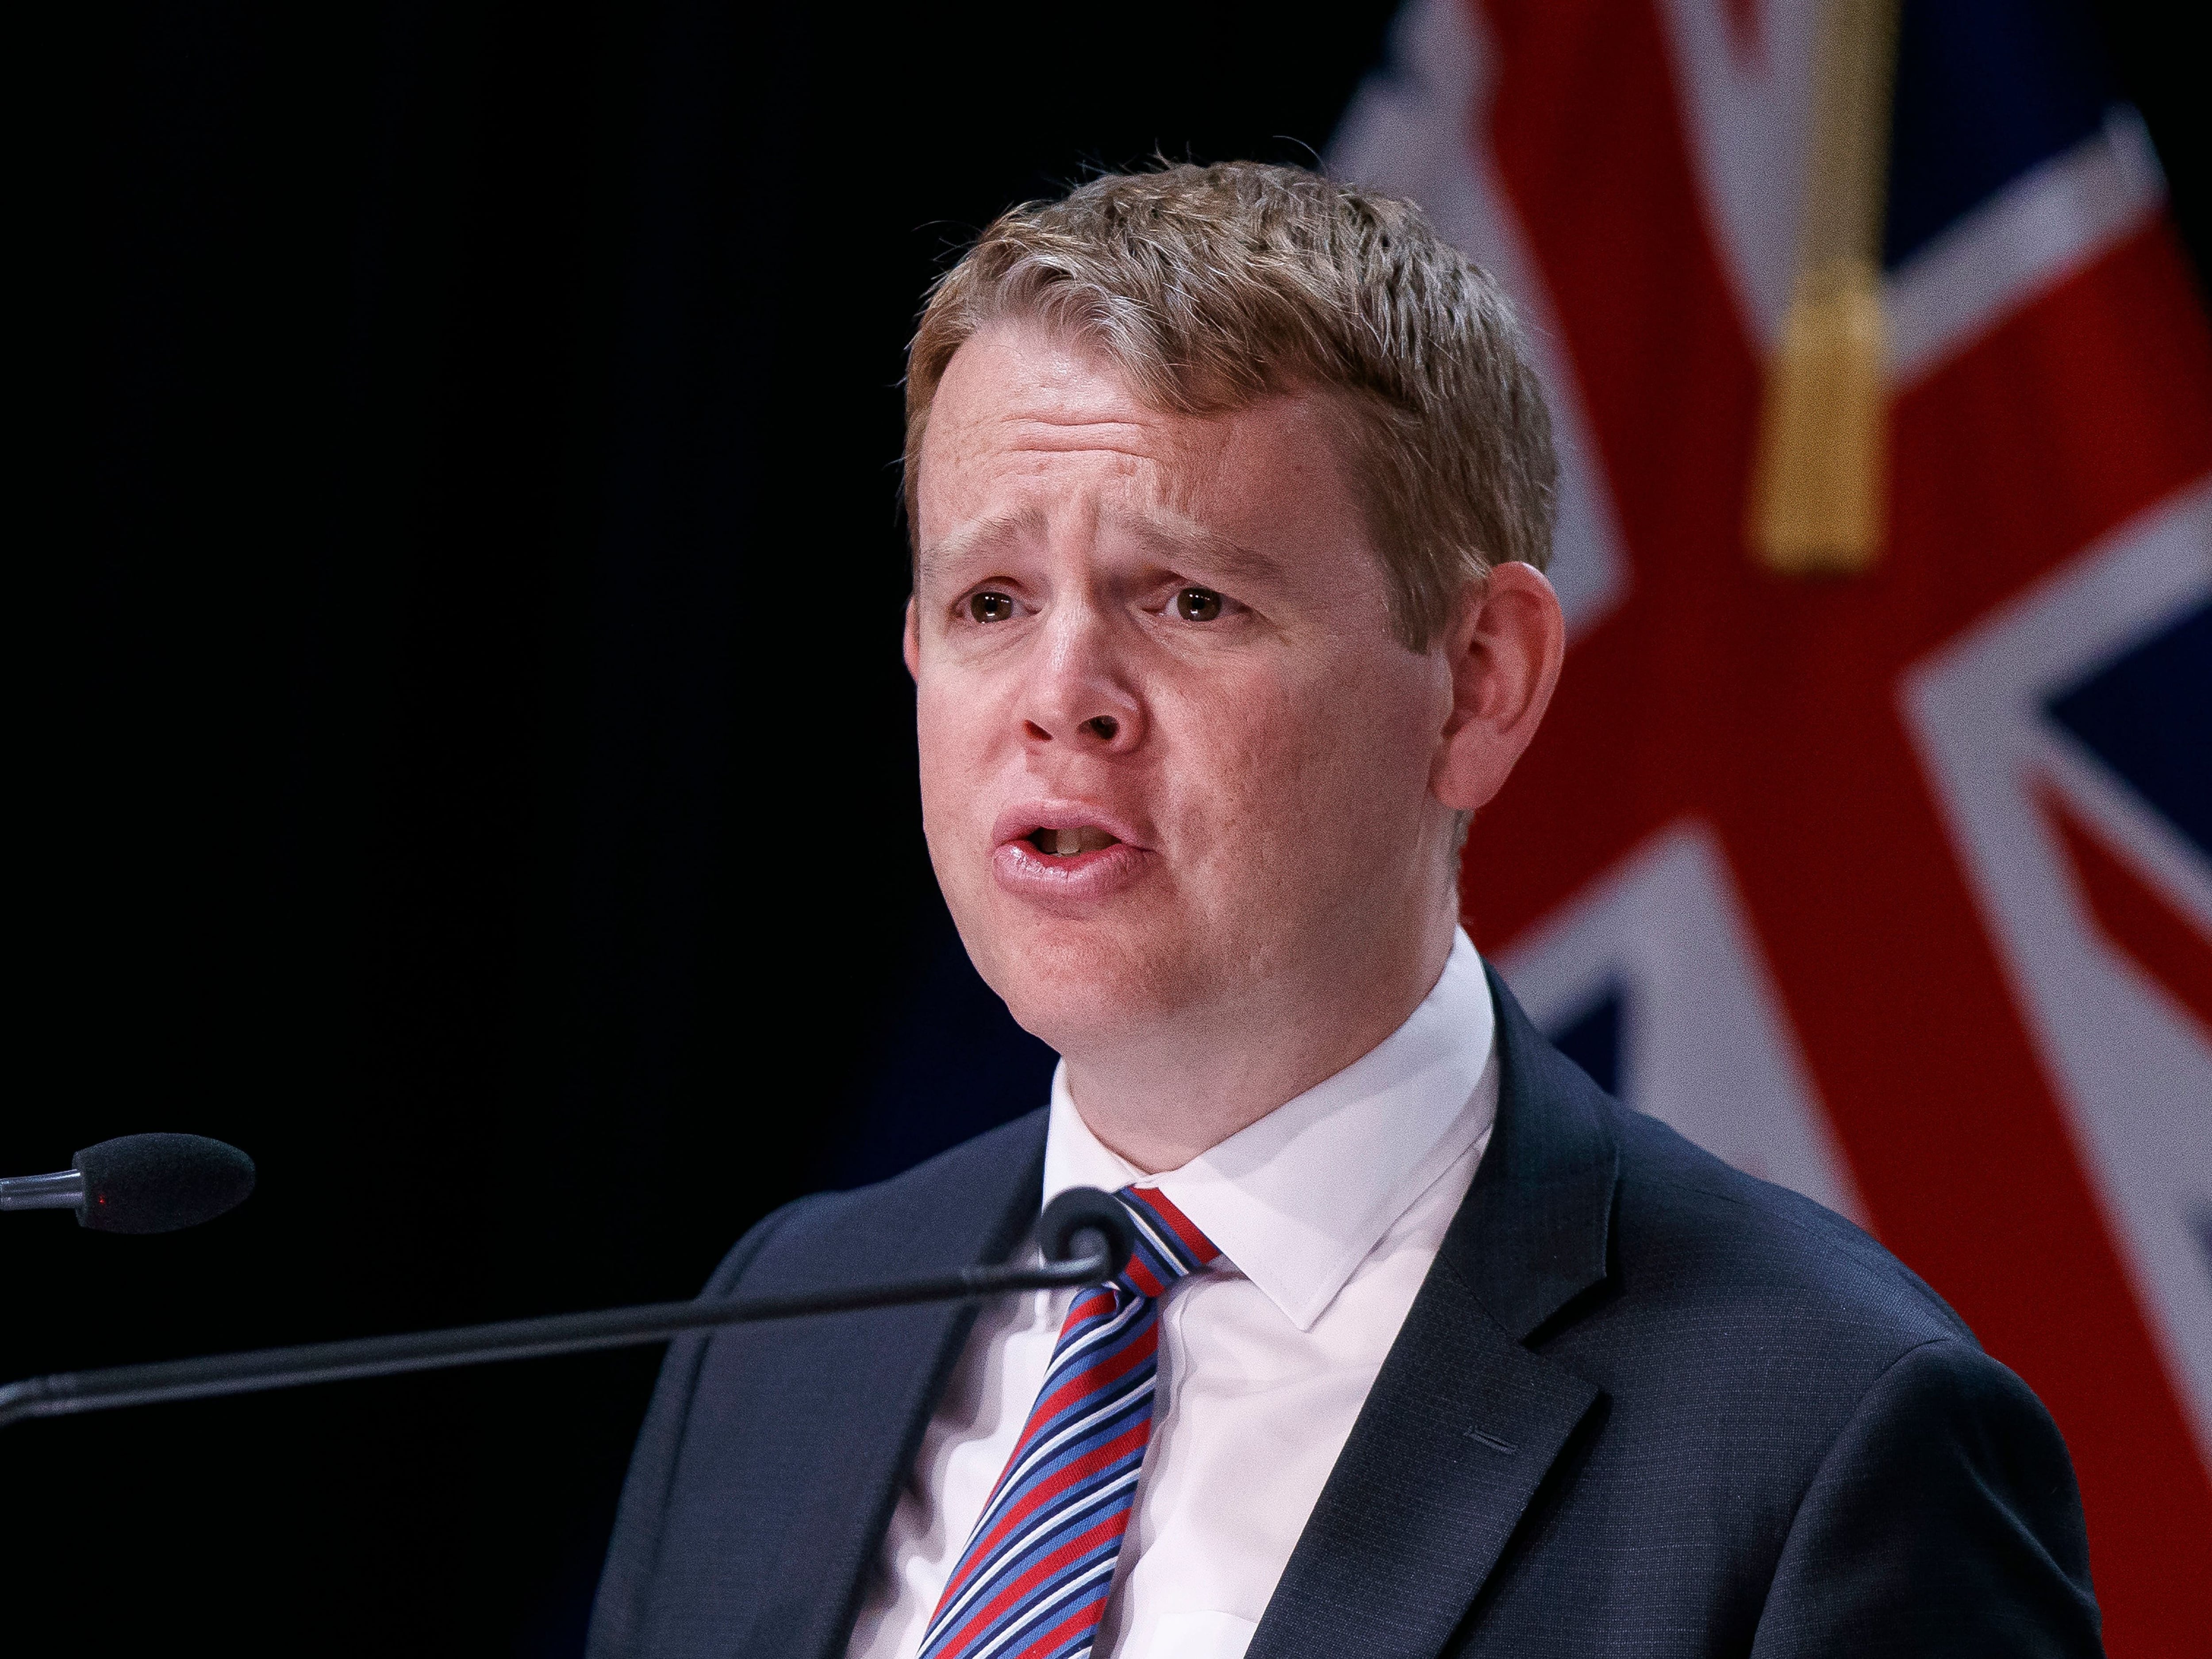 Chris Hipkins set to be New Zealand’s next prime minister